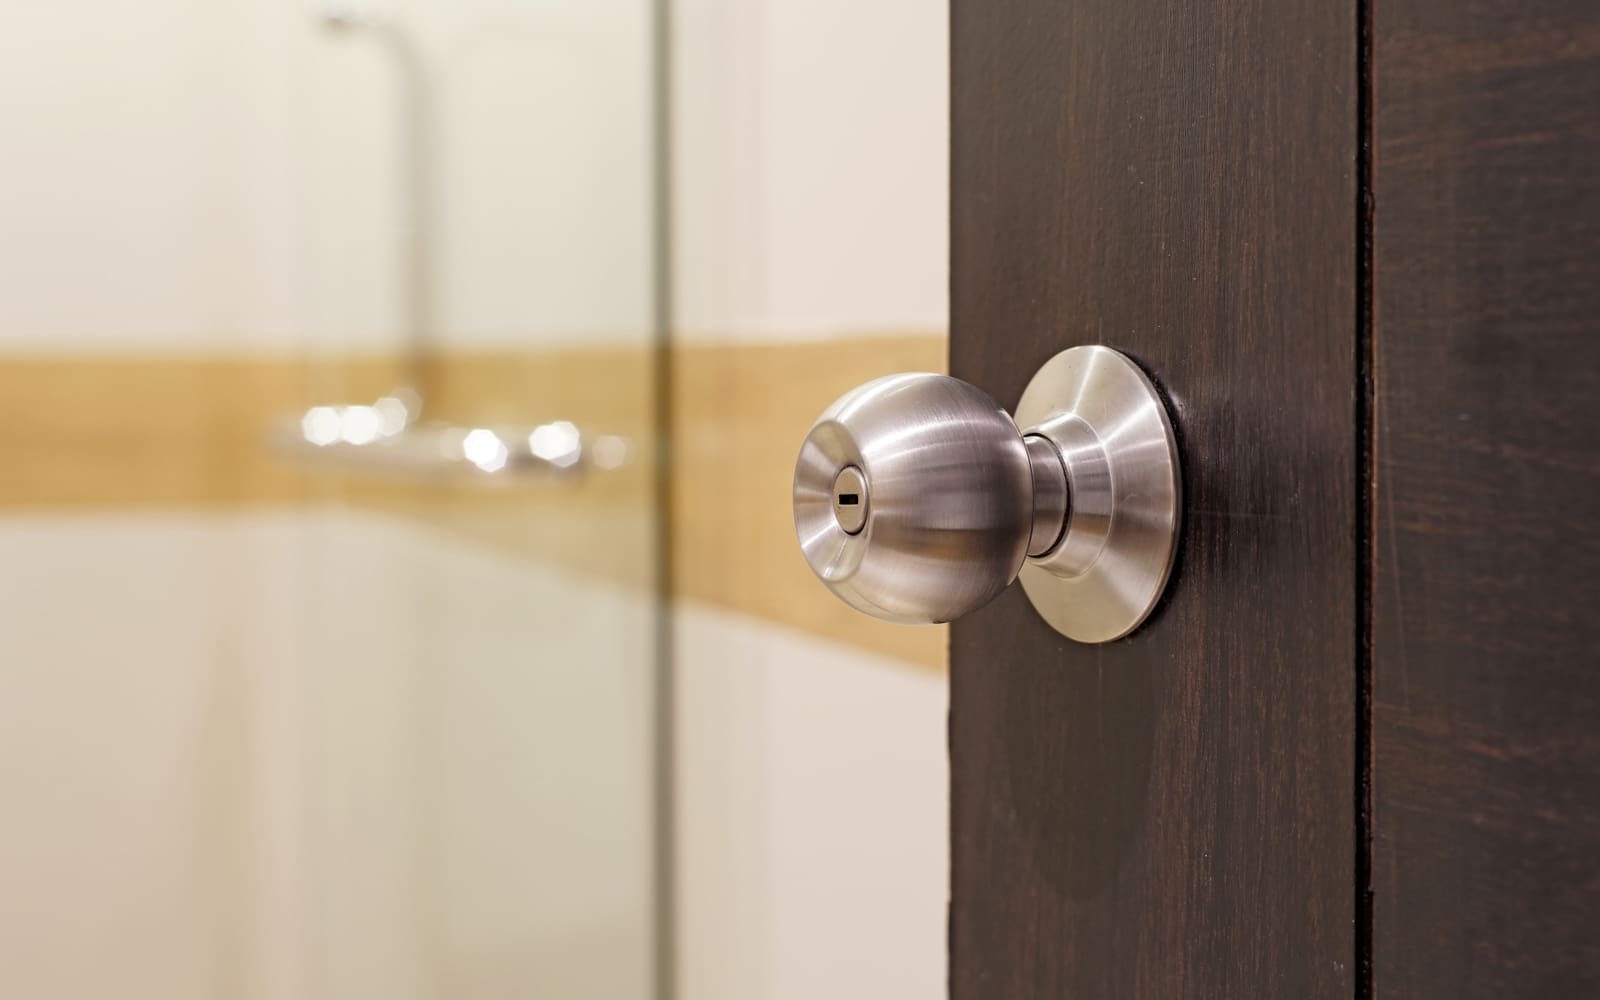 How to Unlock Bathroom Door With a Hole in 2022